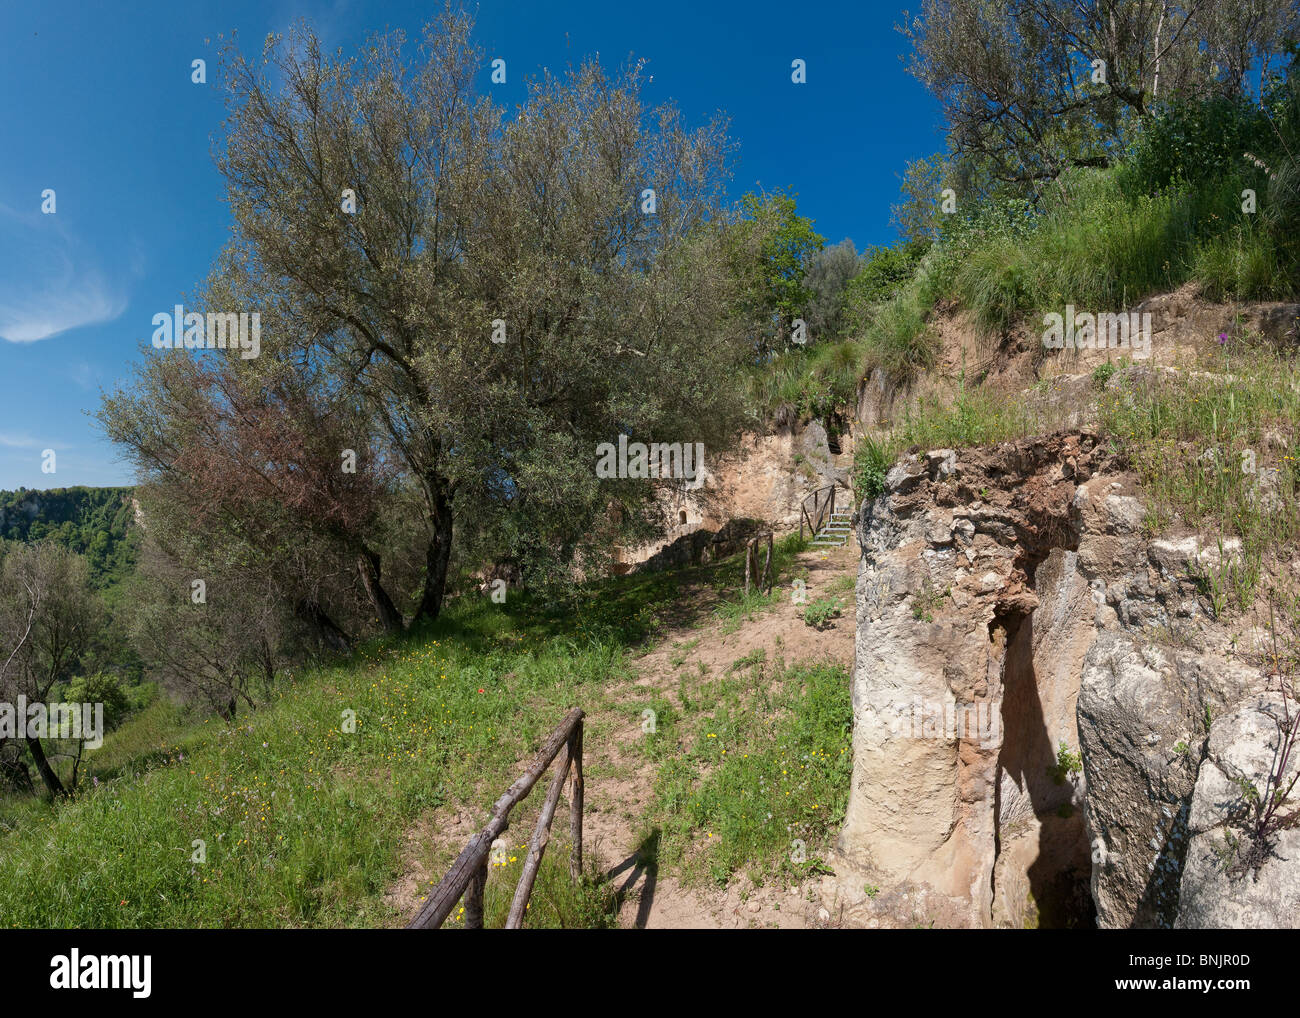 Grotto di Zungri Calabria Mediterranean Italy vegetation trees rocks cliffs, Stock Photo